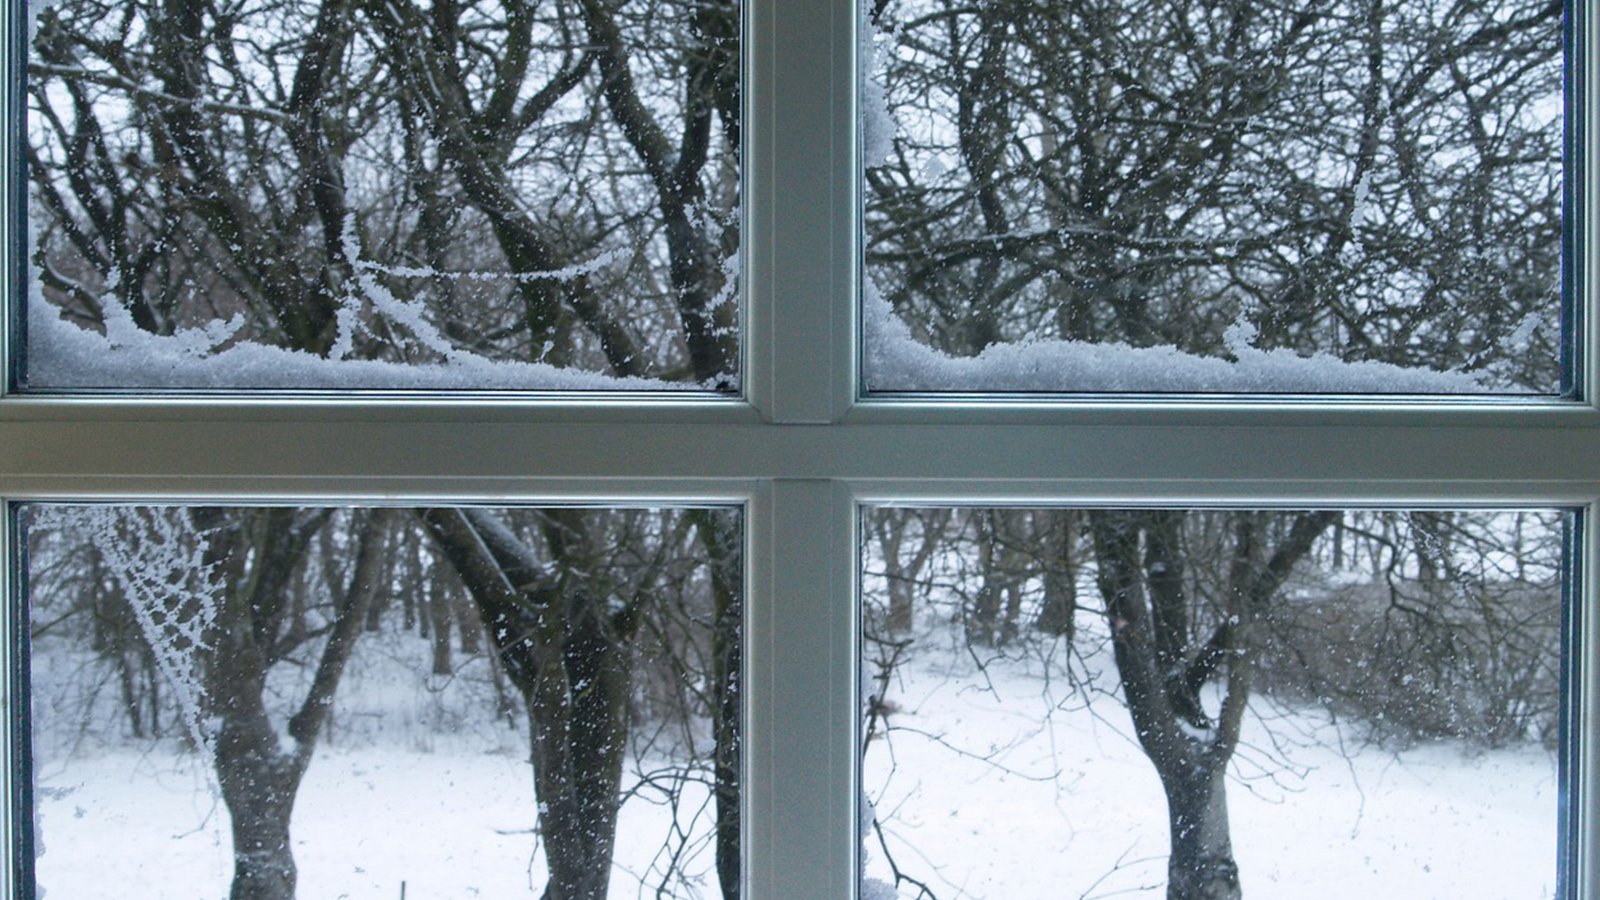 Snow Window